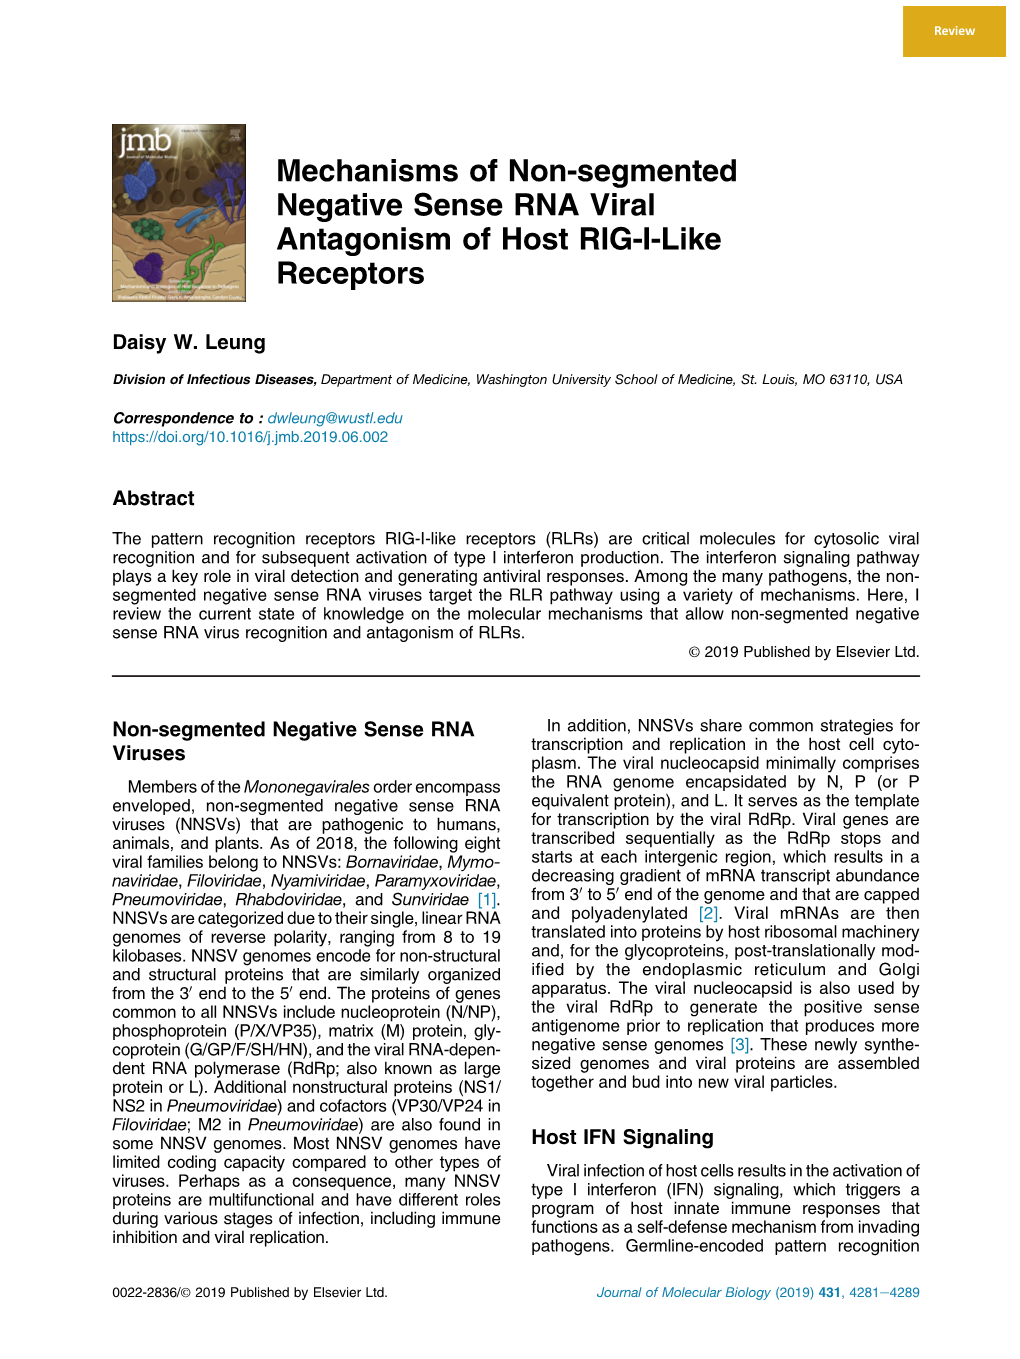 Mechanisms of Non-Segmented Negative Sense RNA Viral Antagonism of Host RIG-I-Like Receptors